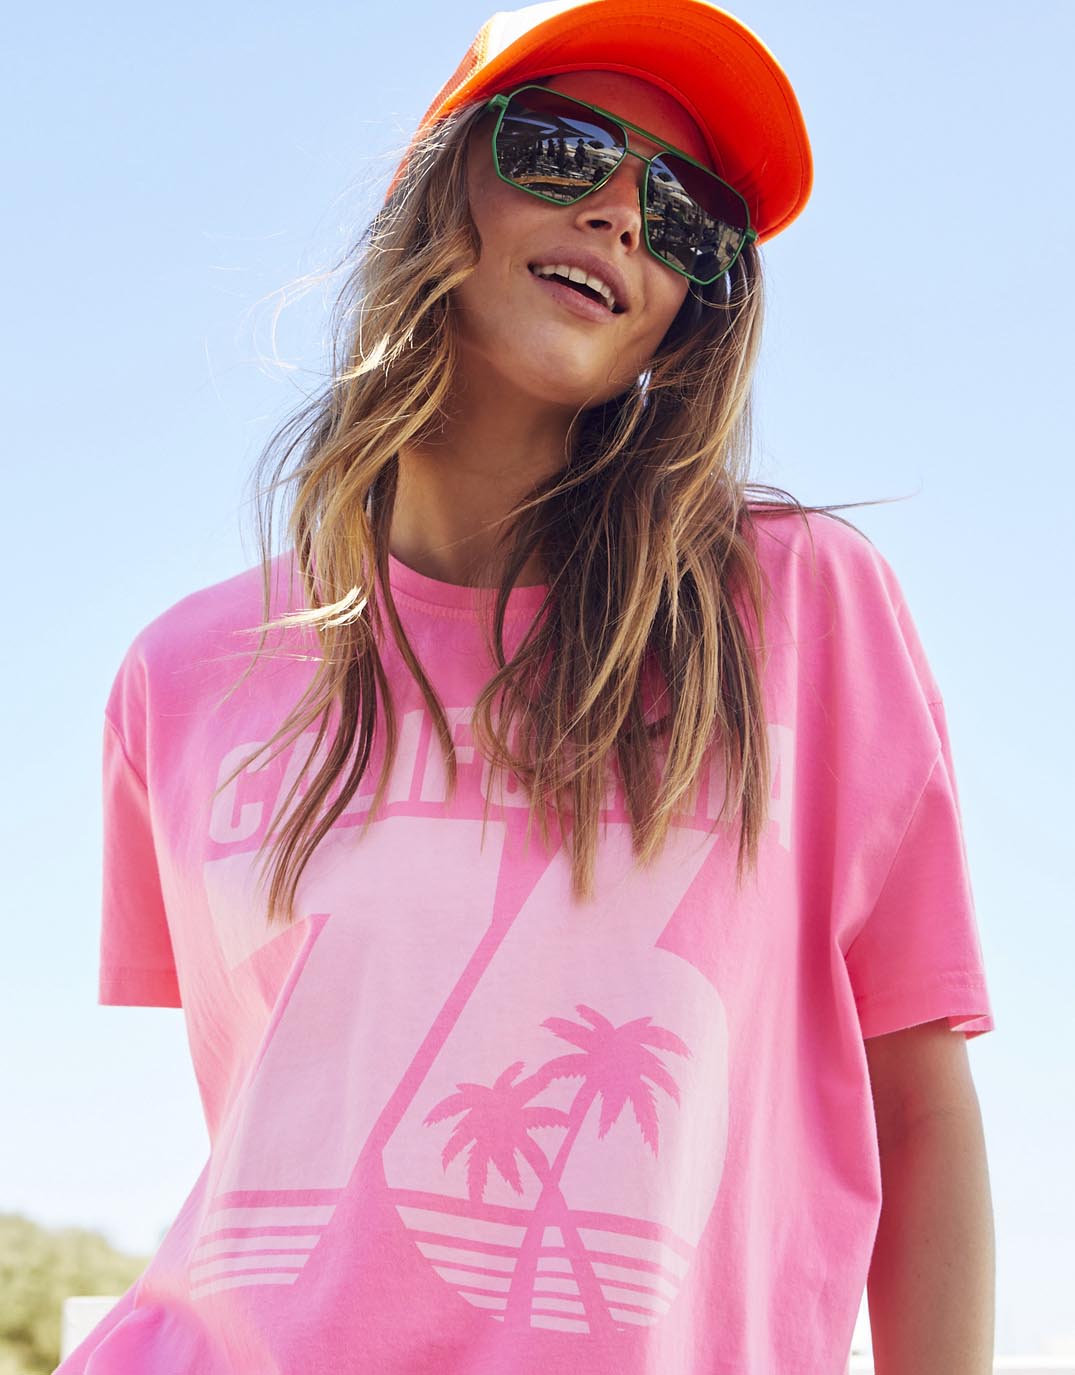 hammill-and-co-california-tee-hot-pink-womens-clothing